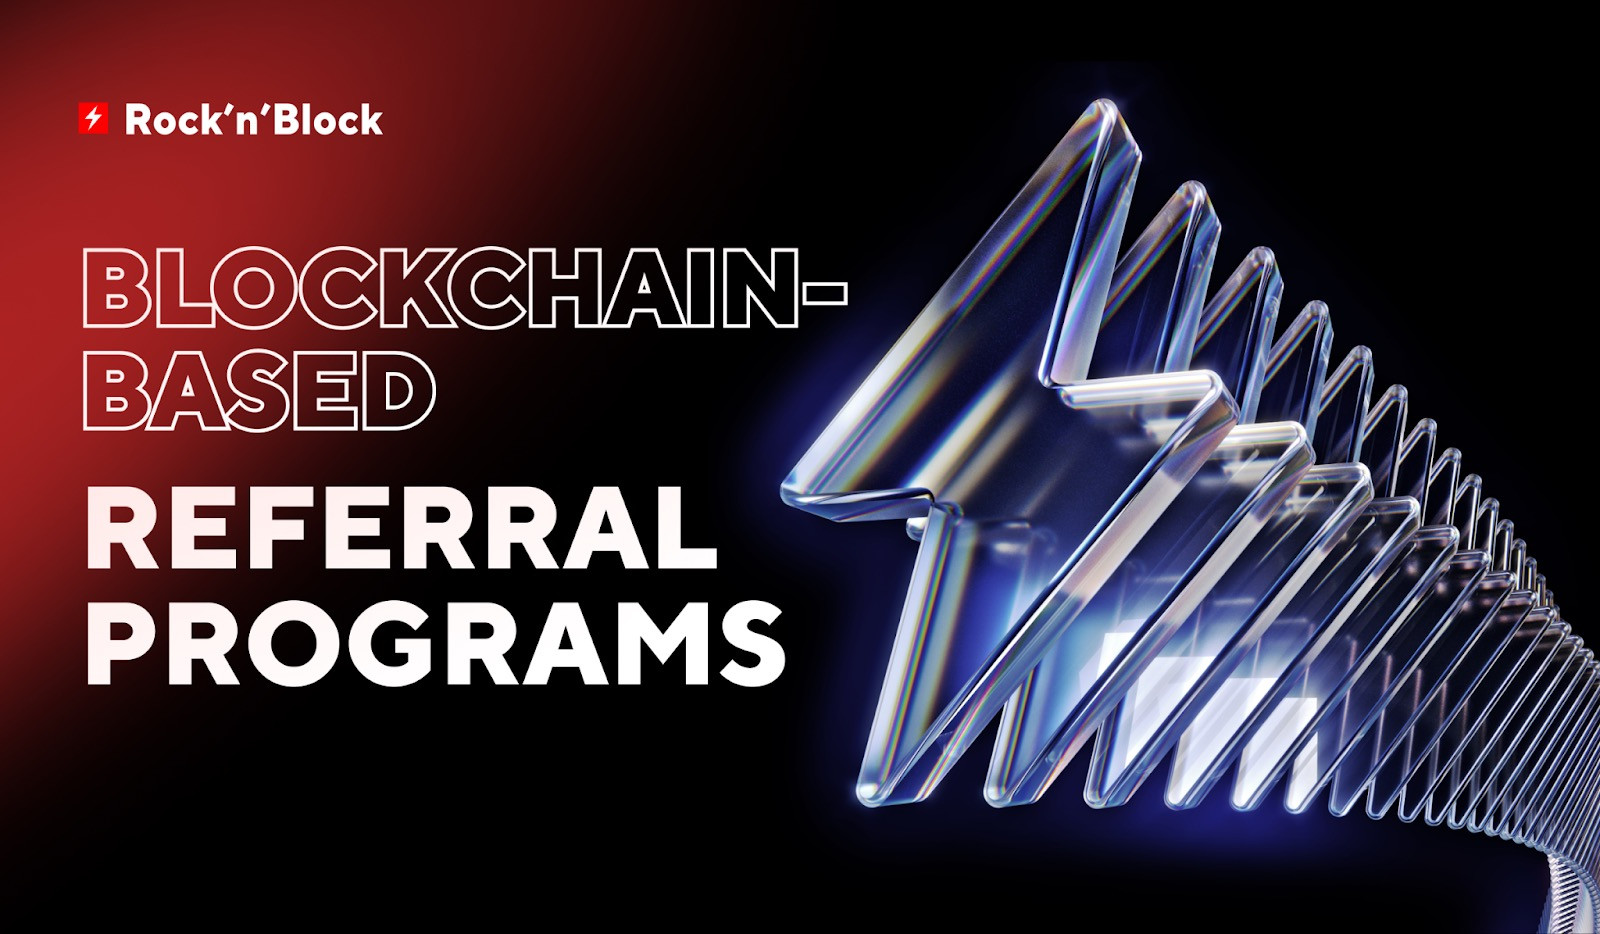 Blockchain referral programs